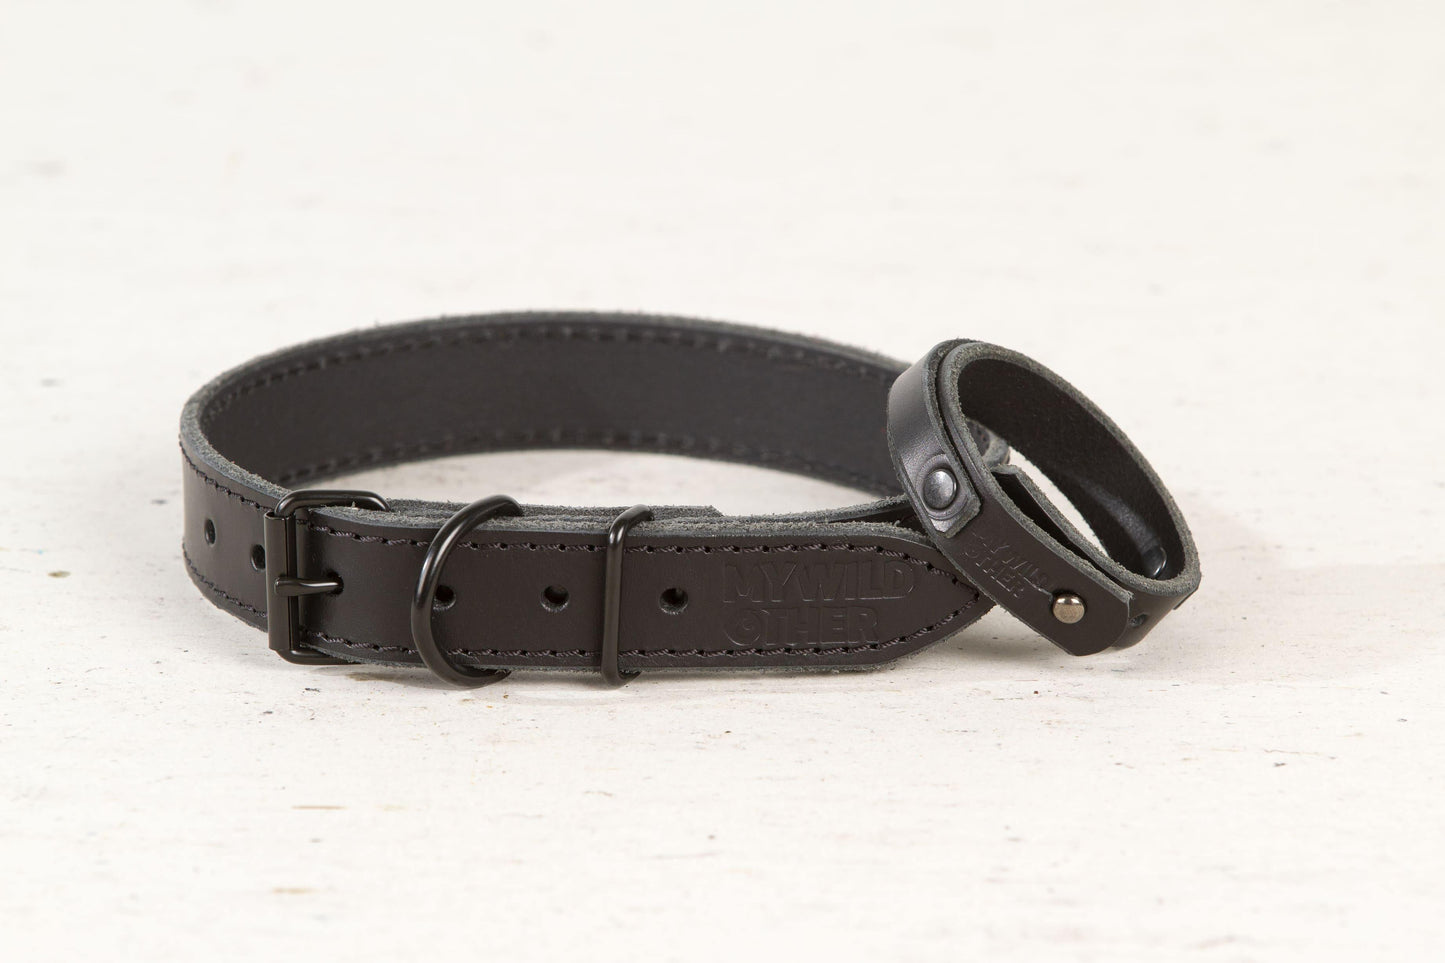 Handmade black leather dog collar - premium dog goods handmade in Europe by My Wild Other